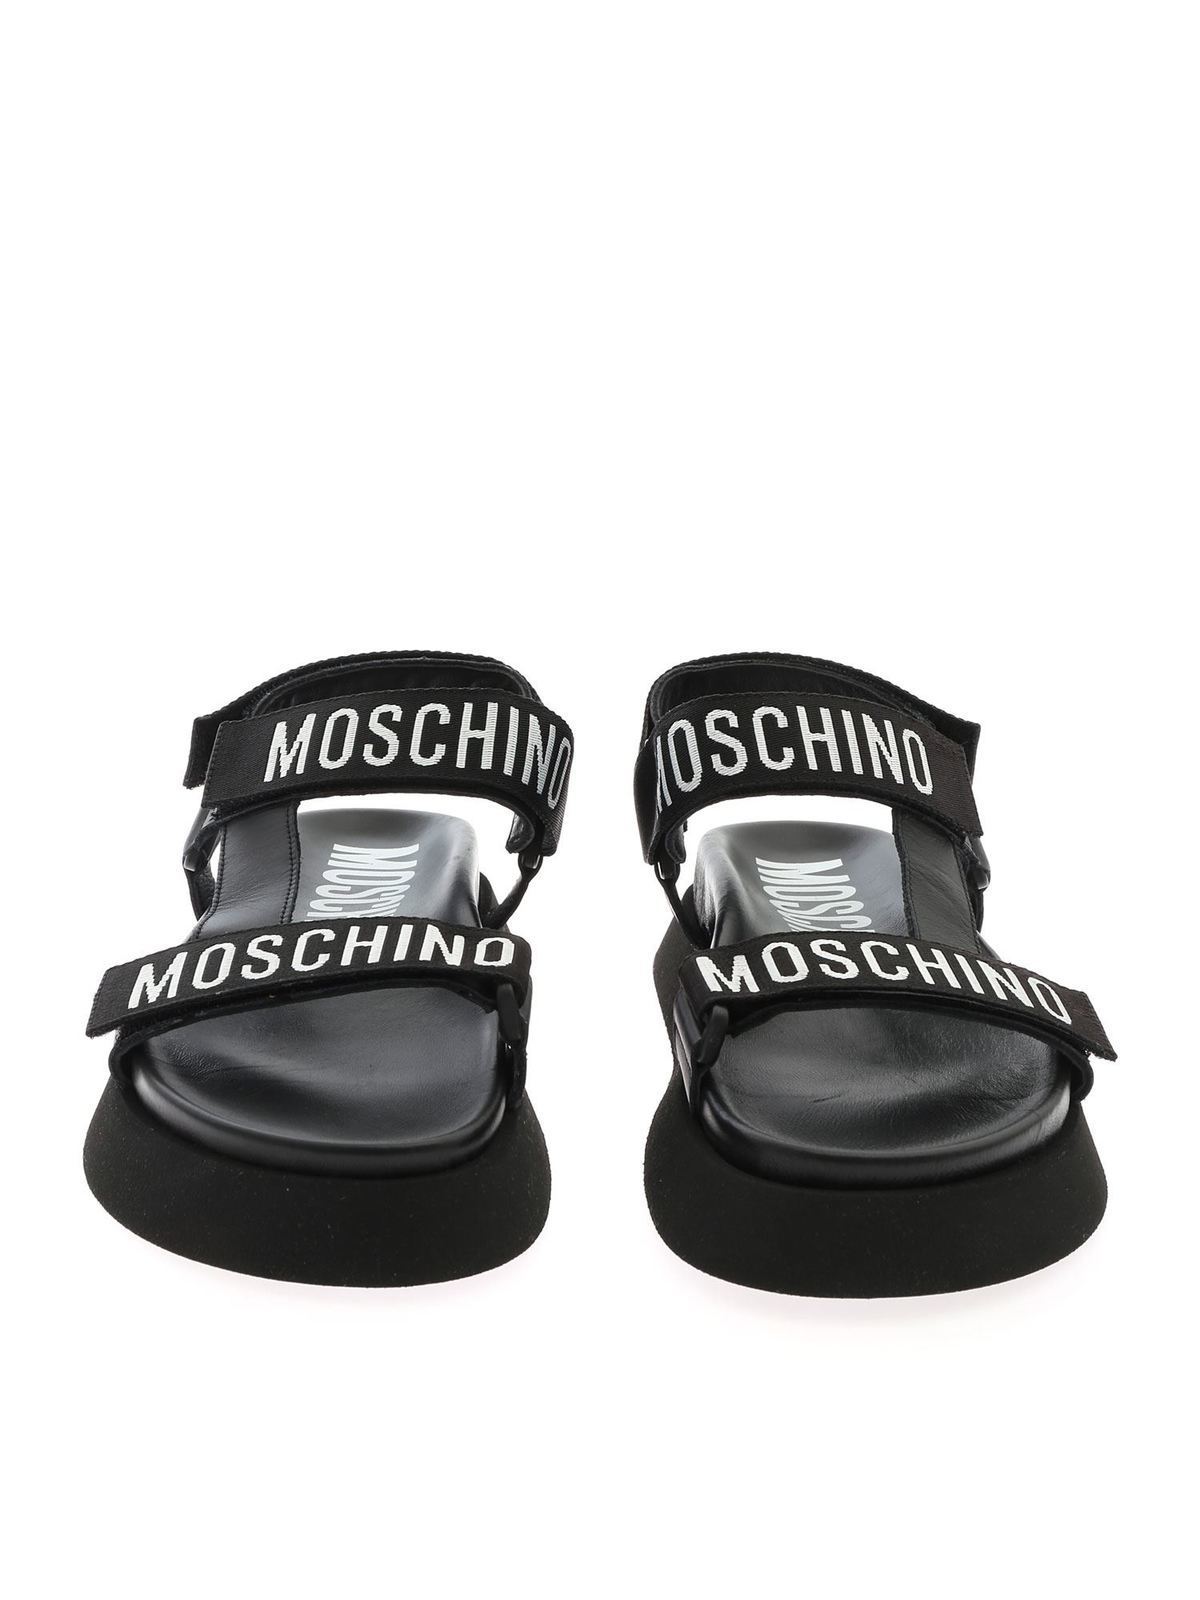 moschino flip flops